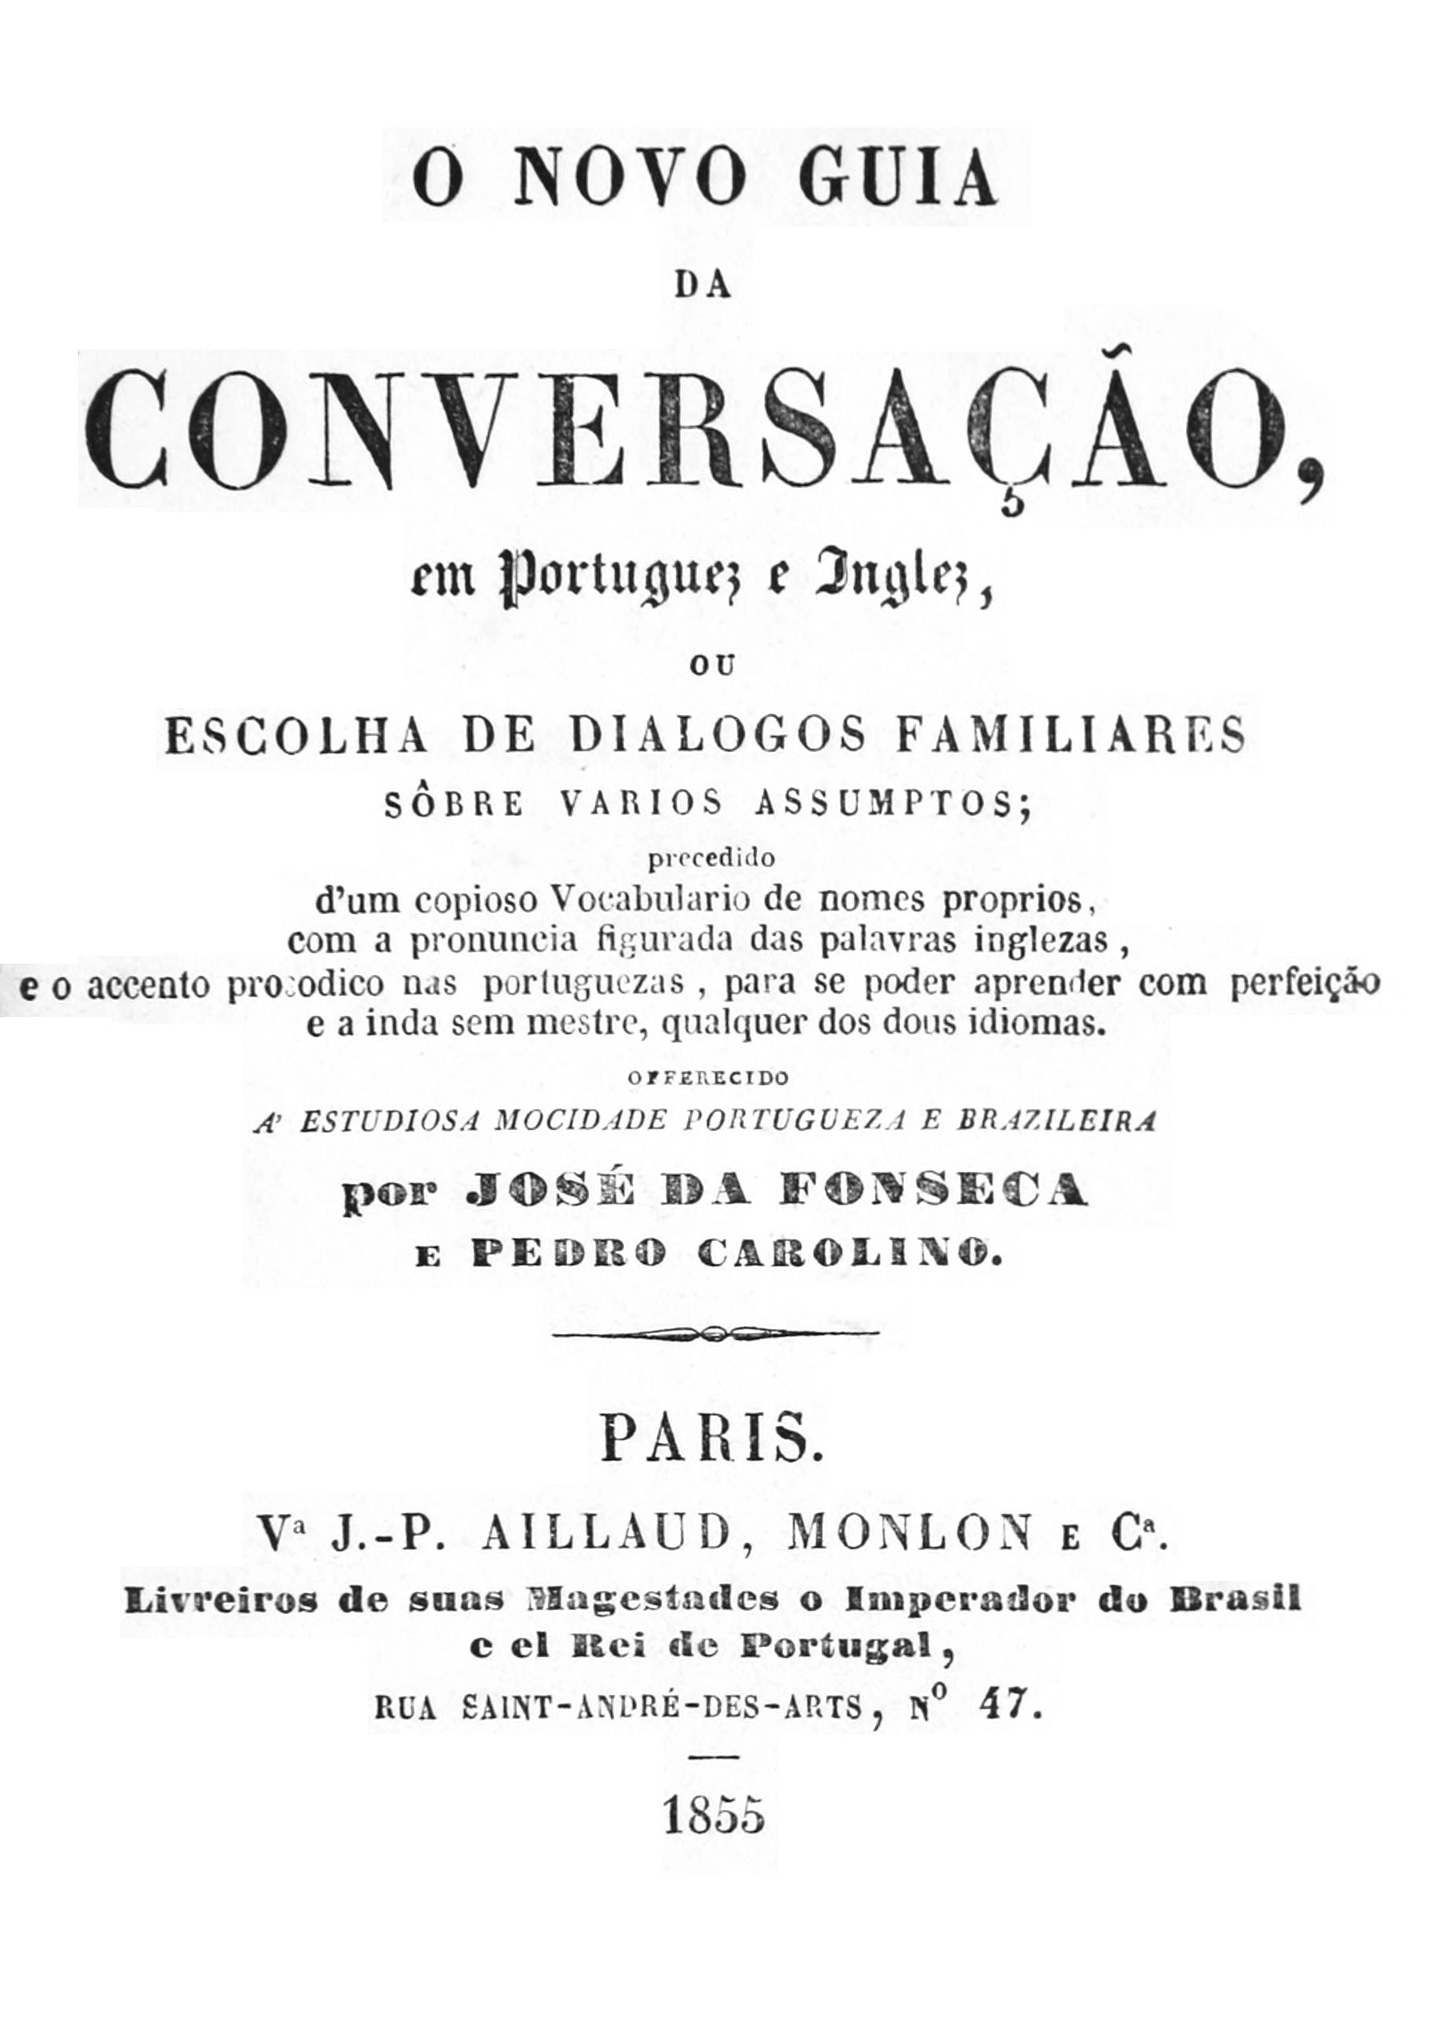 O novo guia da conversaçao en portuguez e inglez 1ere edition.jpg